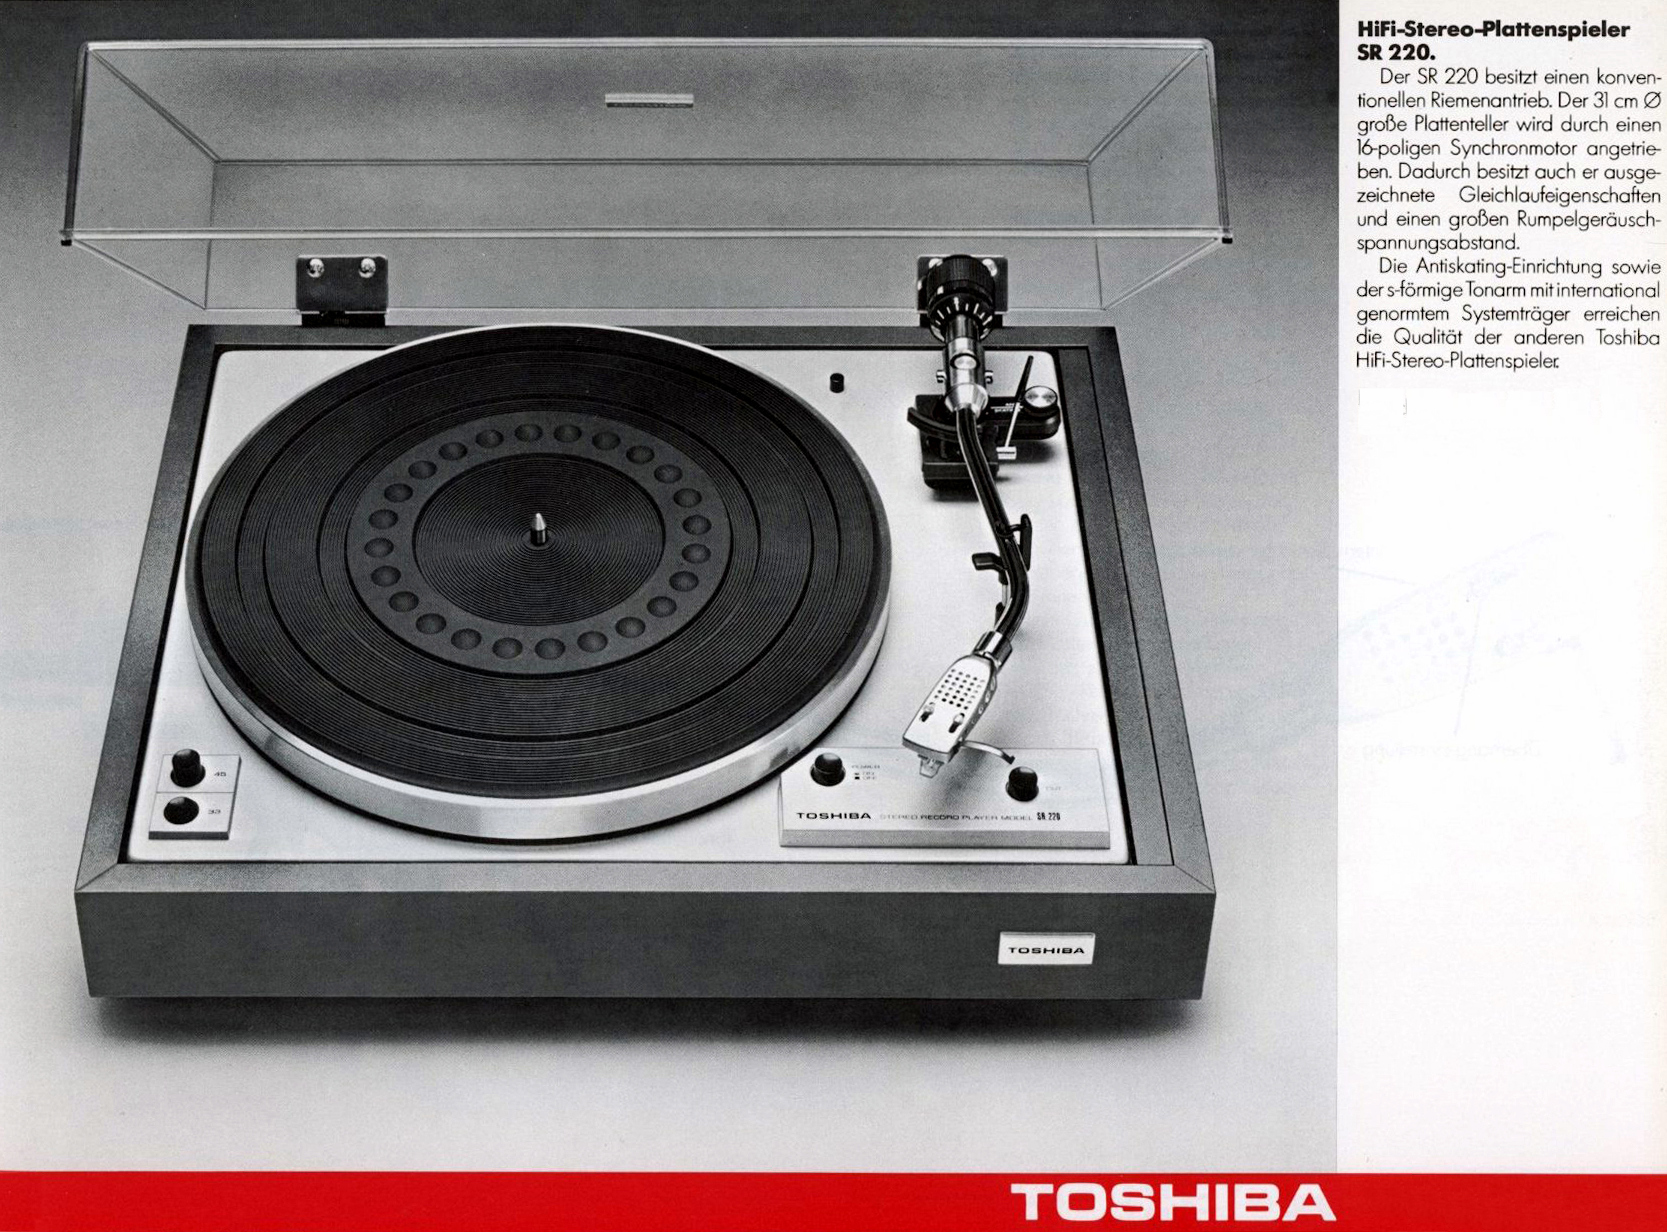 Toshiba SR-220-Prospekt-1.jpg